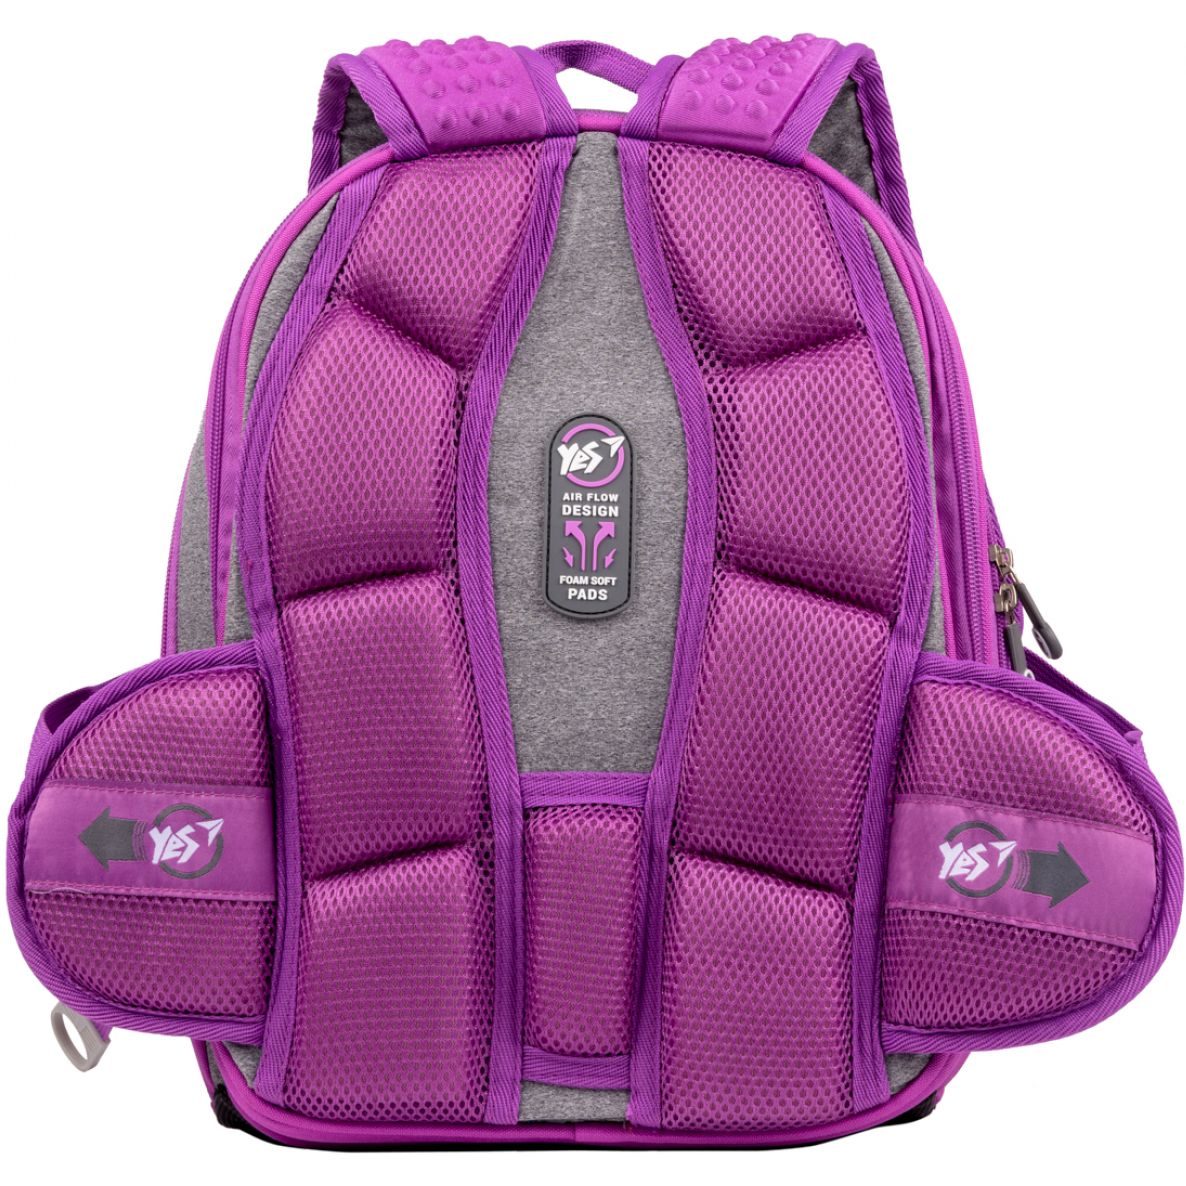 Каркасный рюкзак Yes S-89 Mini girl (559102) - фото 5